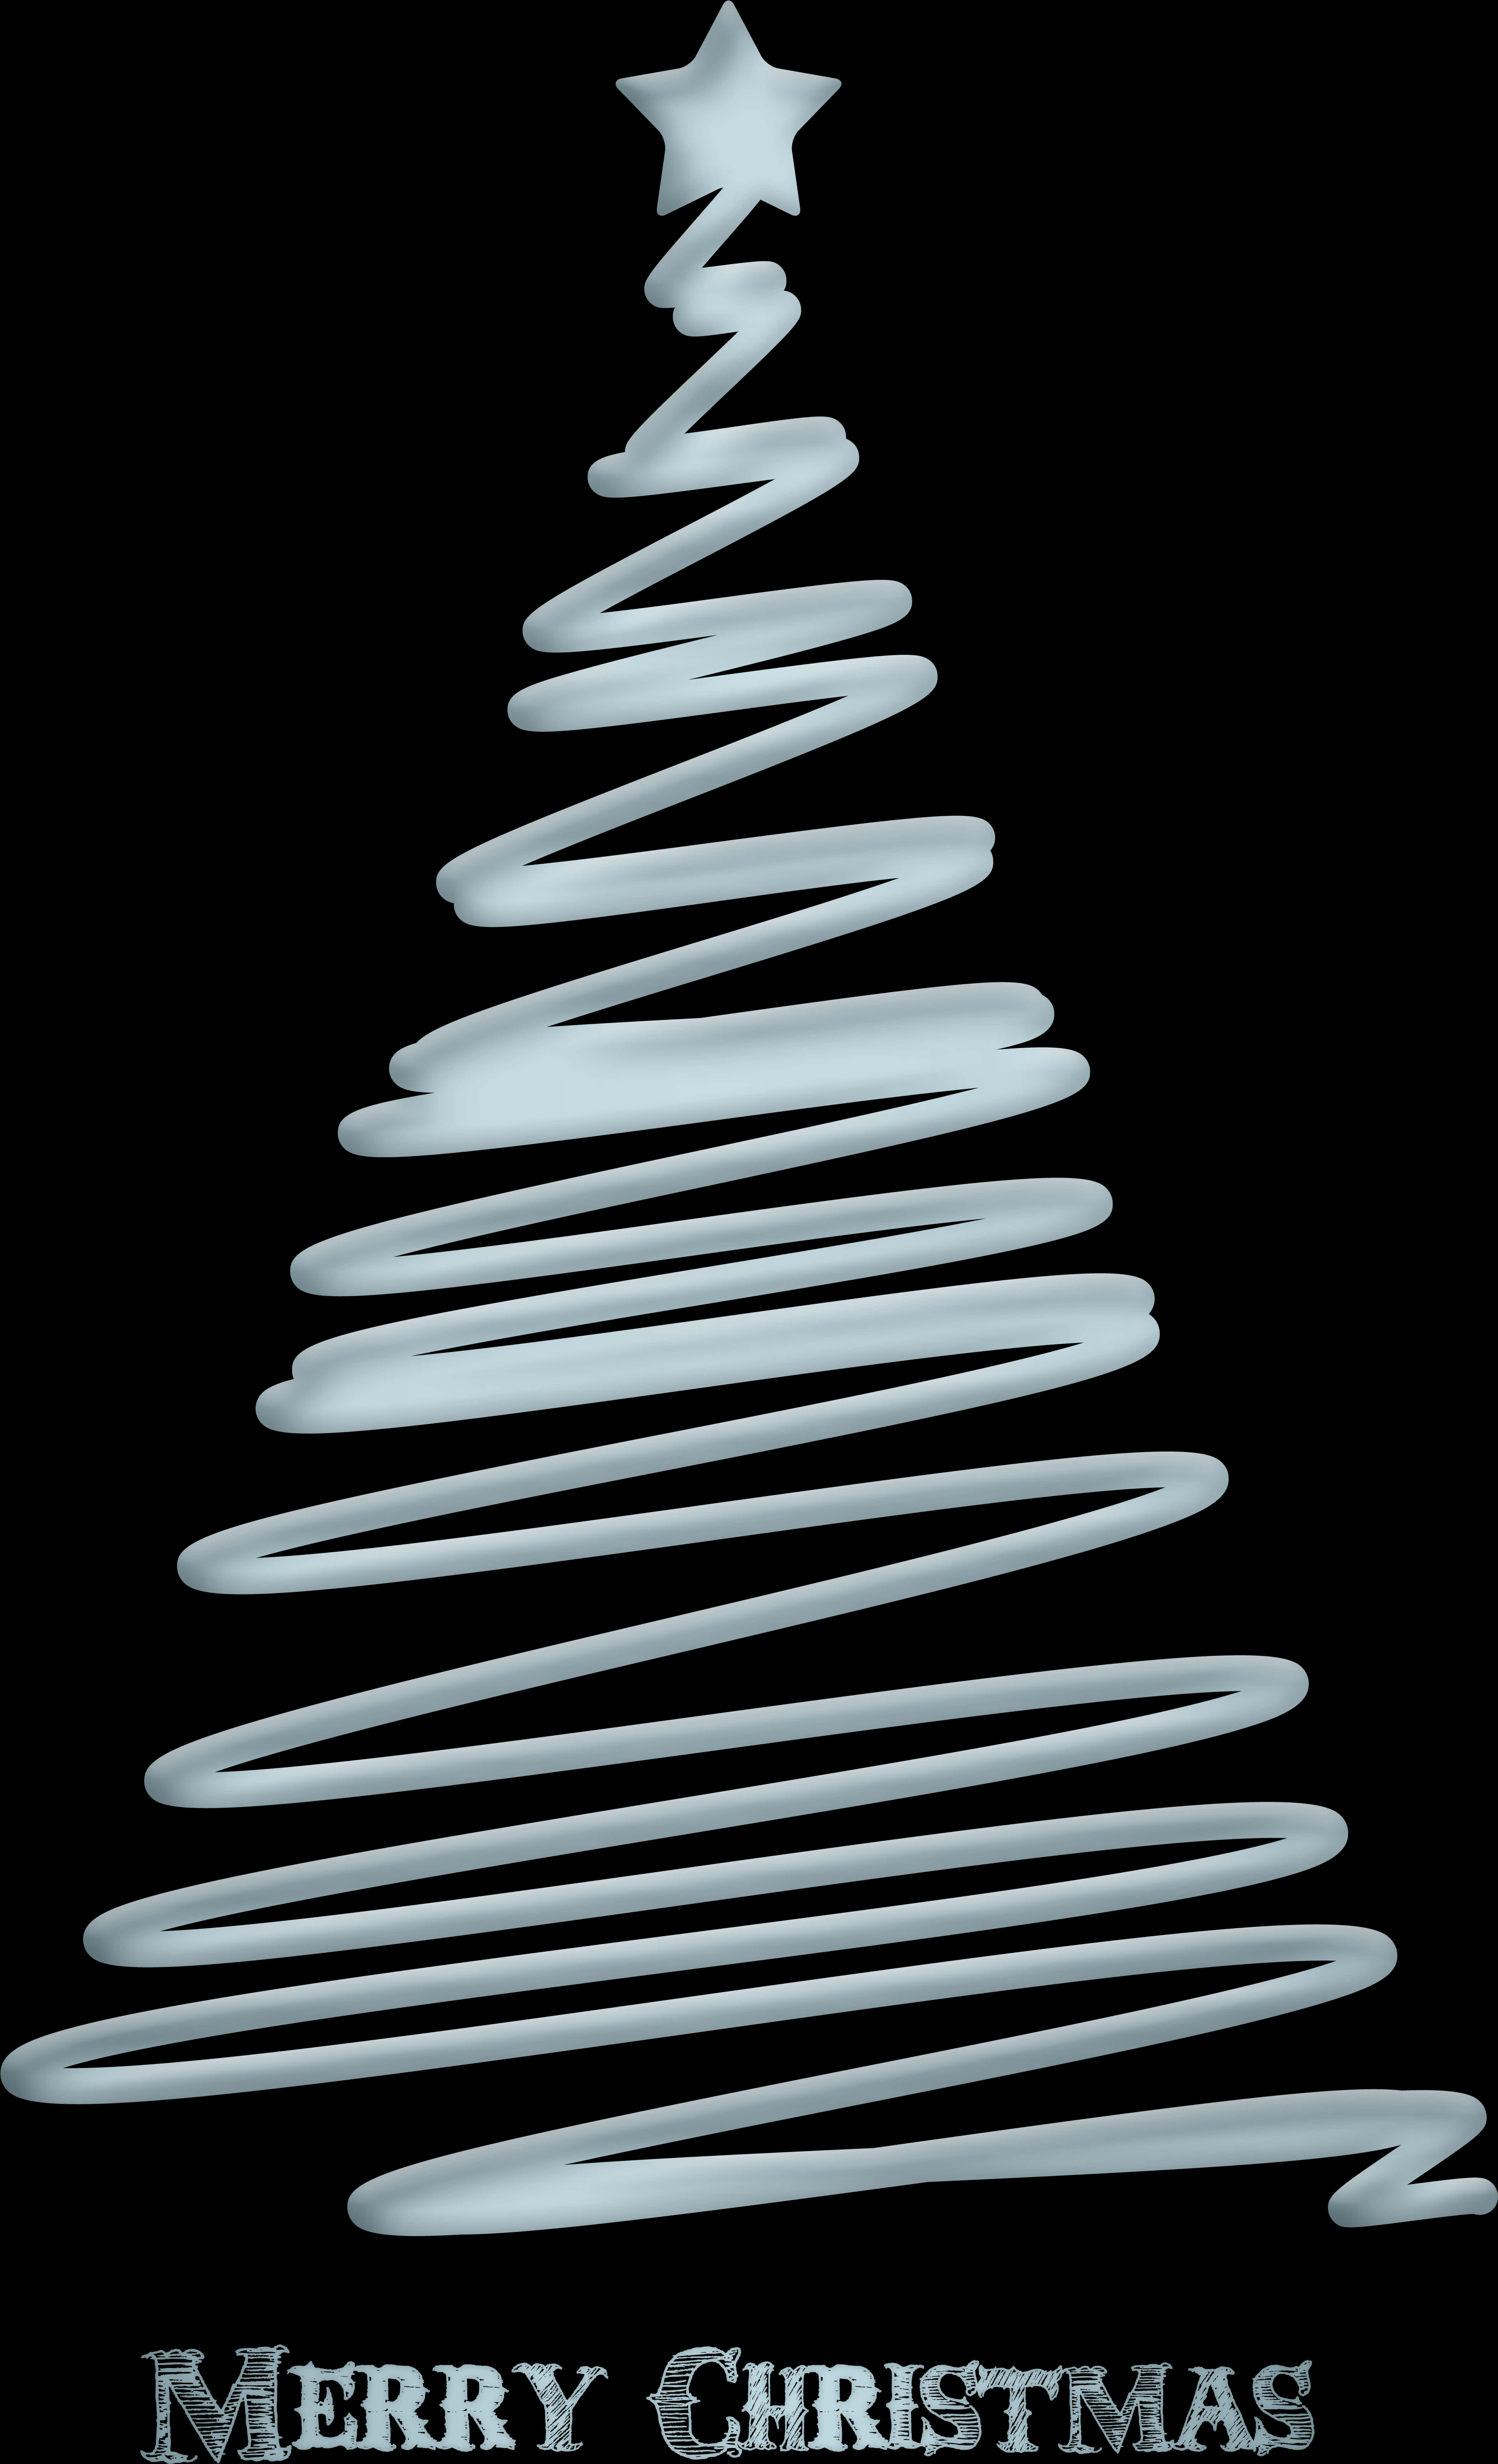 Abstract Christmas Tree Design PNG